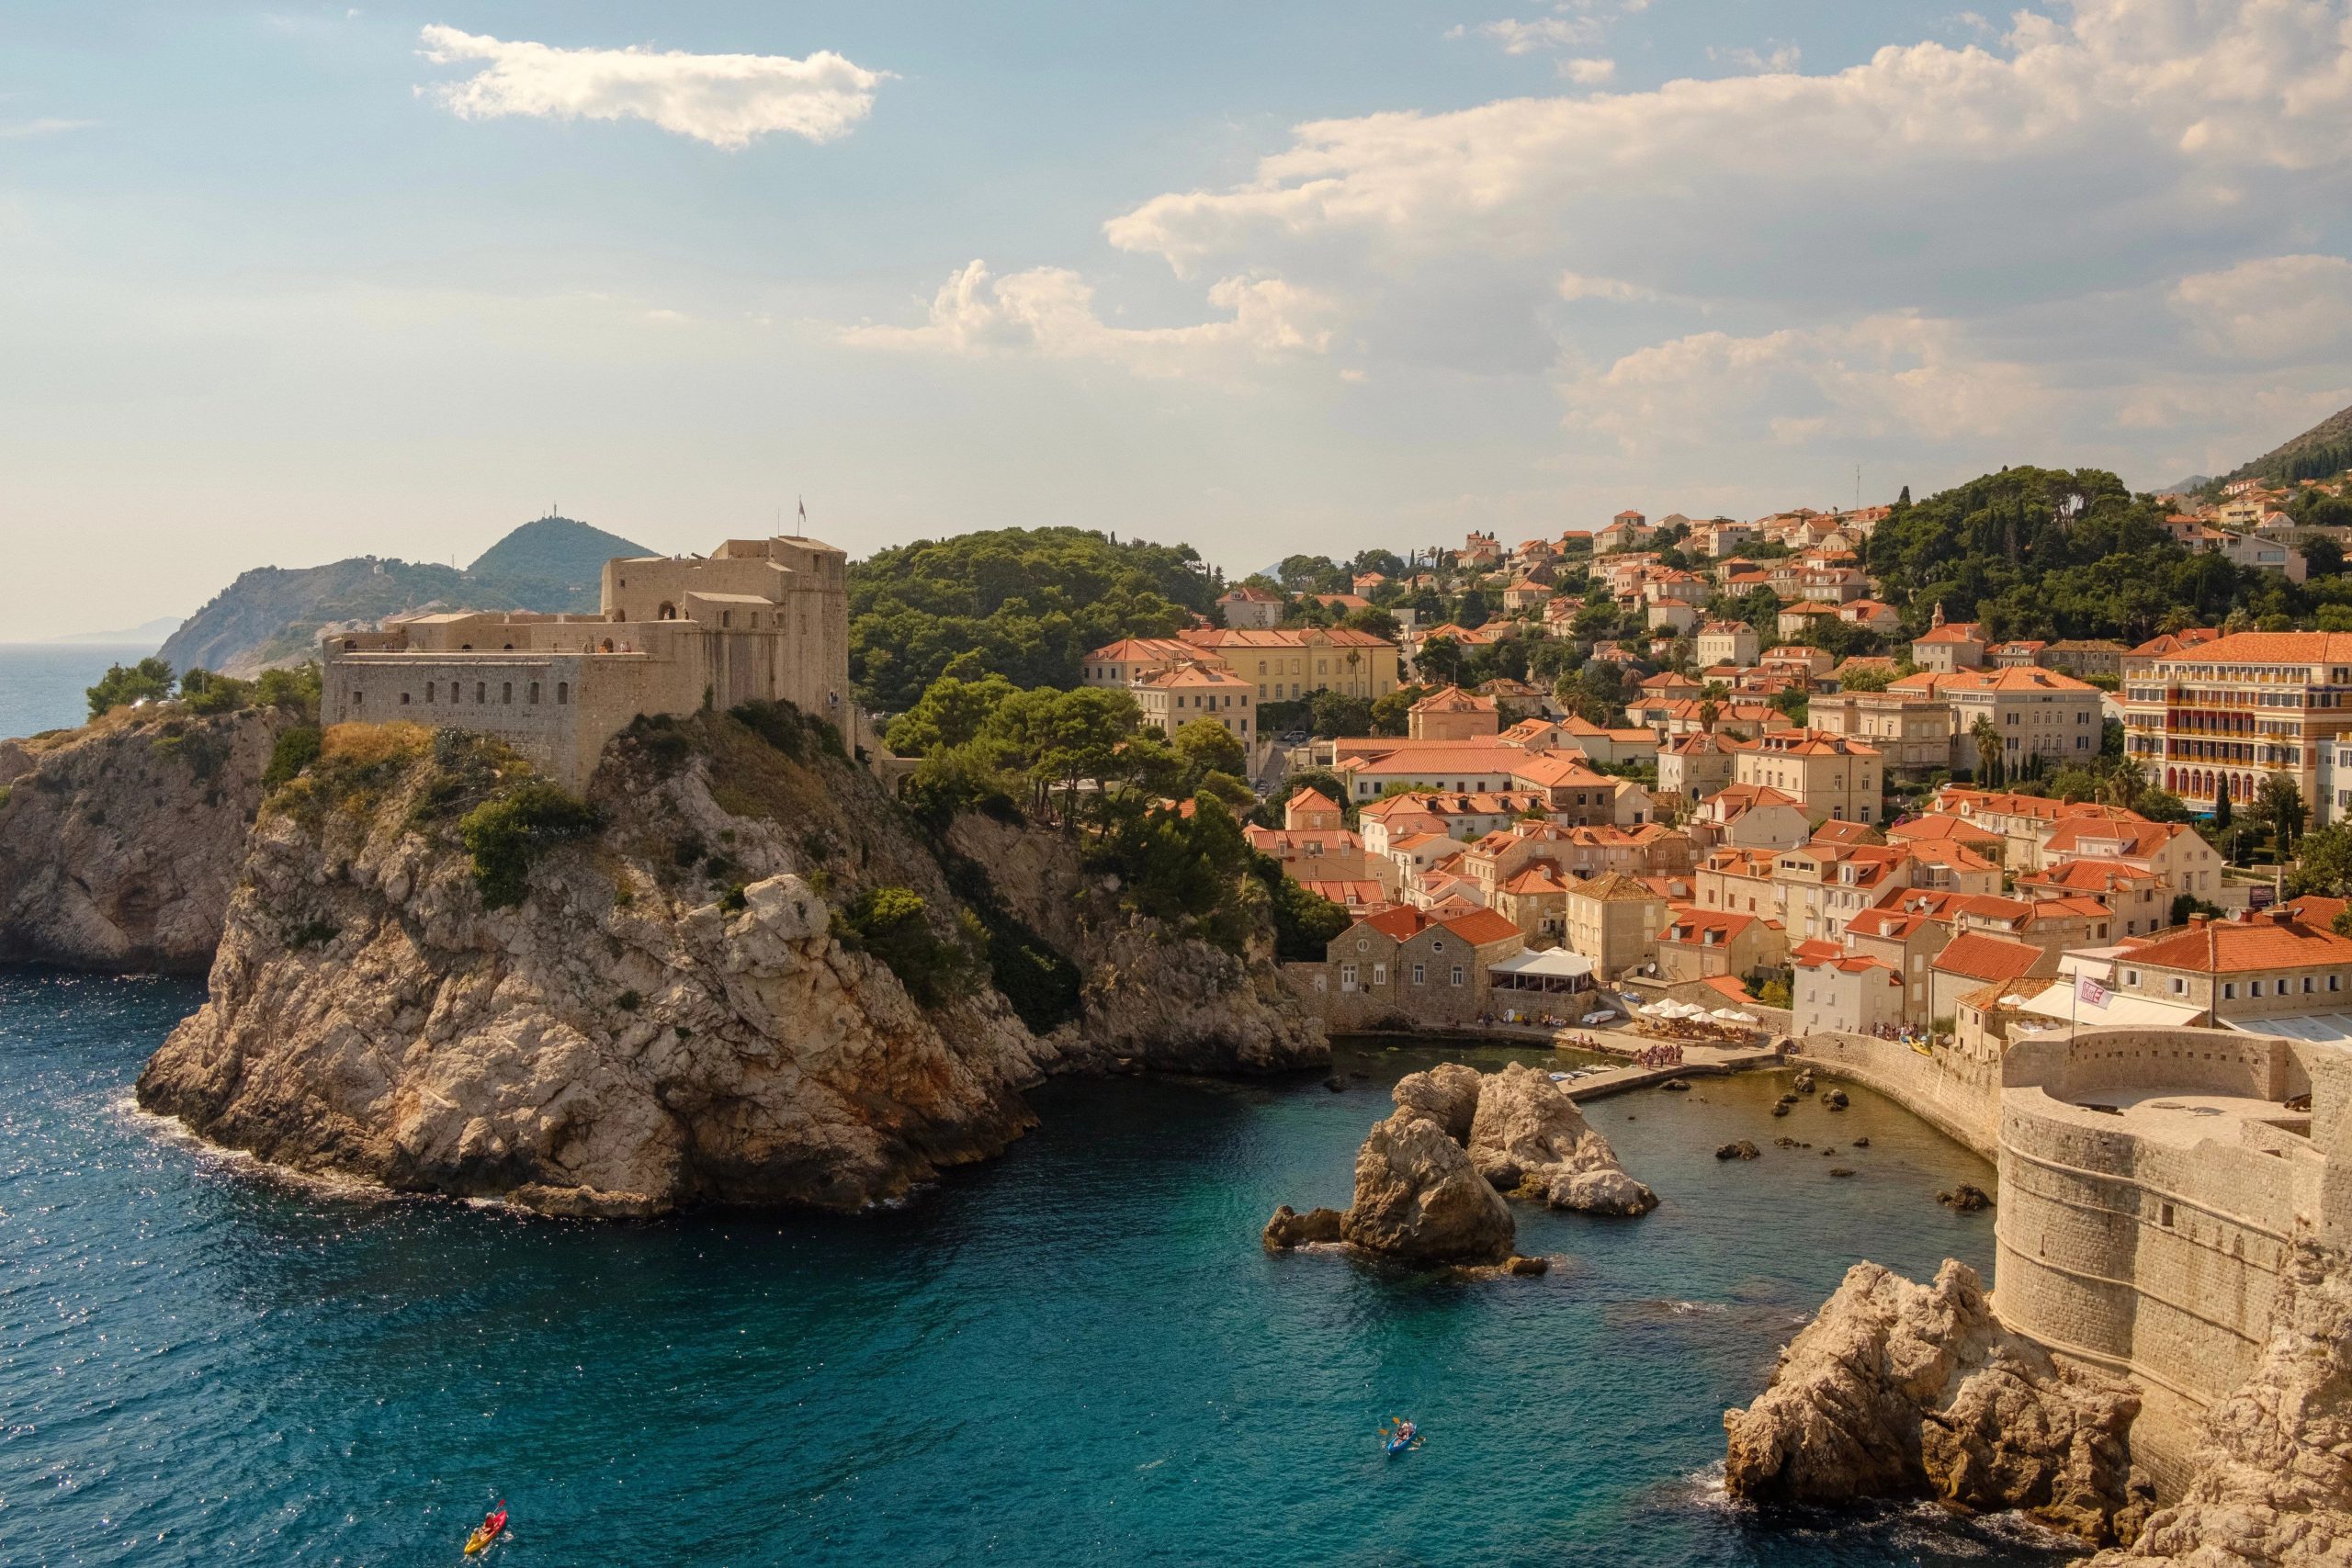 Dubrovnik, Croatia. The site used for Kings Landing in Game of Thrones